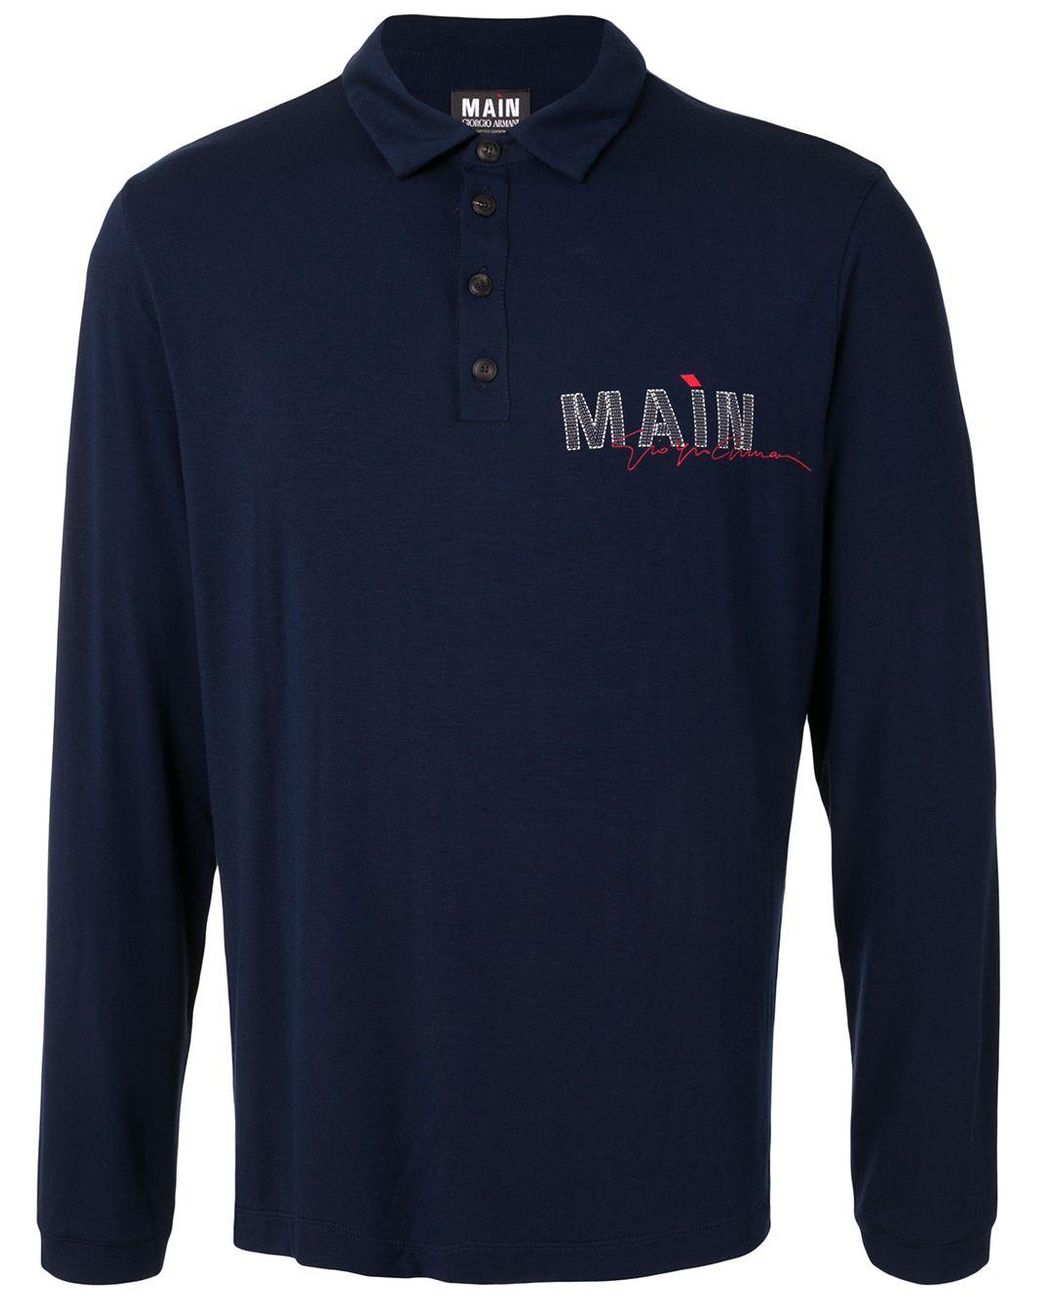 Giorgio Armani Synthetic Logo Long Sleeve Polo Shirt in Blue for Men - Lyst